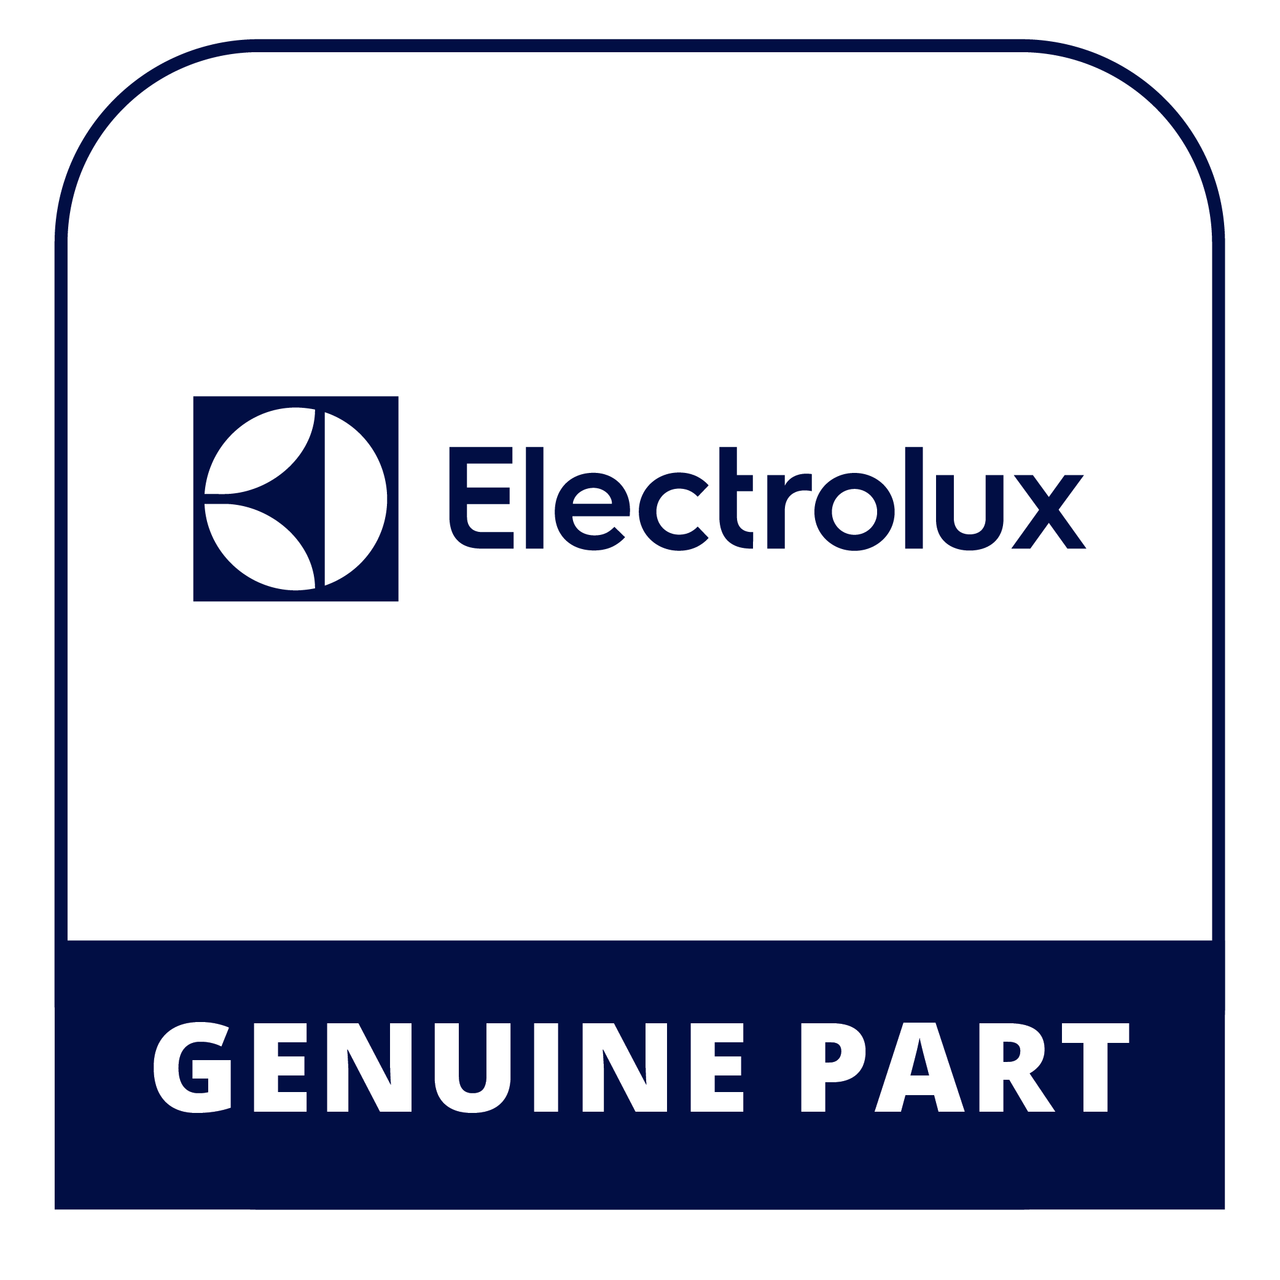 Frigidaire - Electrolux 218249810 Seal Coil - Genuine Electrolux Part